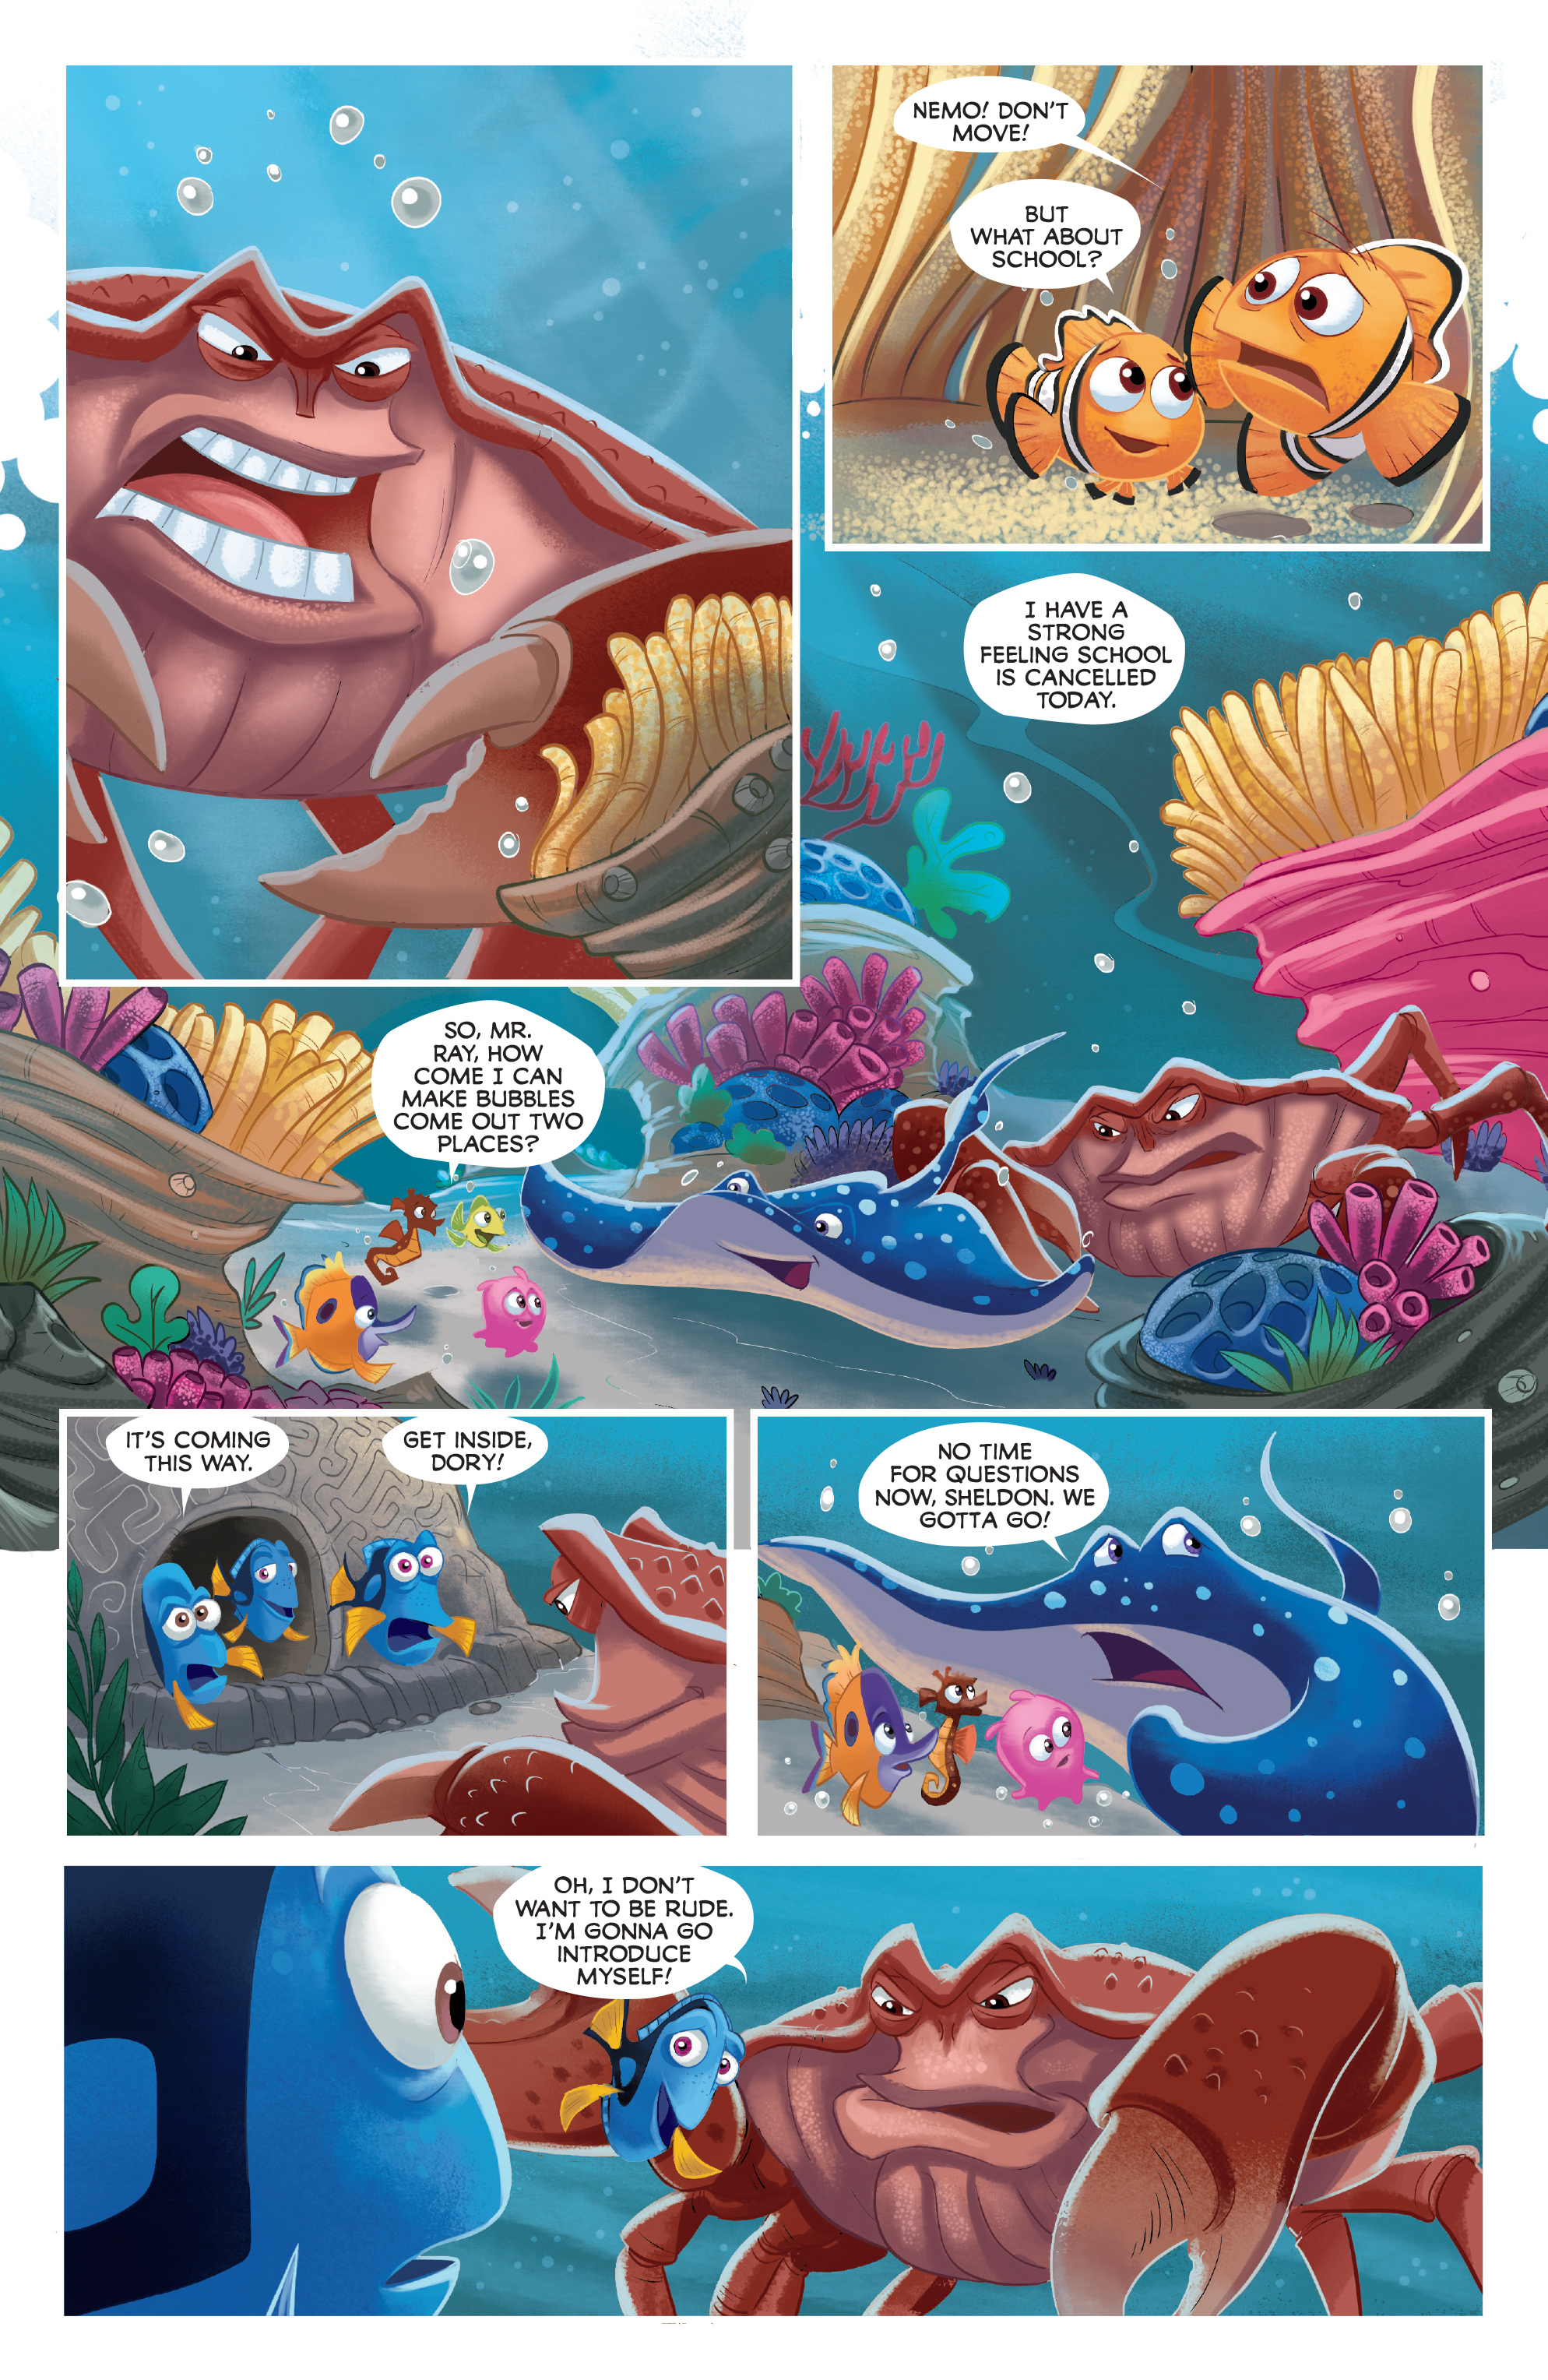 Finding Nemo Porn Comic - Disney Pixar Finding Dory Issue 3 | Read Disney Pixar Finding Dory Issue 3  comic online in high quality. Read Full Comic online for free - Read comics  online in high quality .| READ COMIC ONLINE